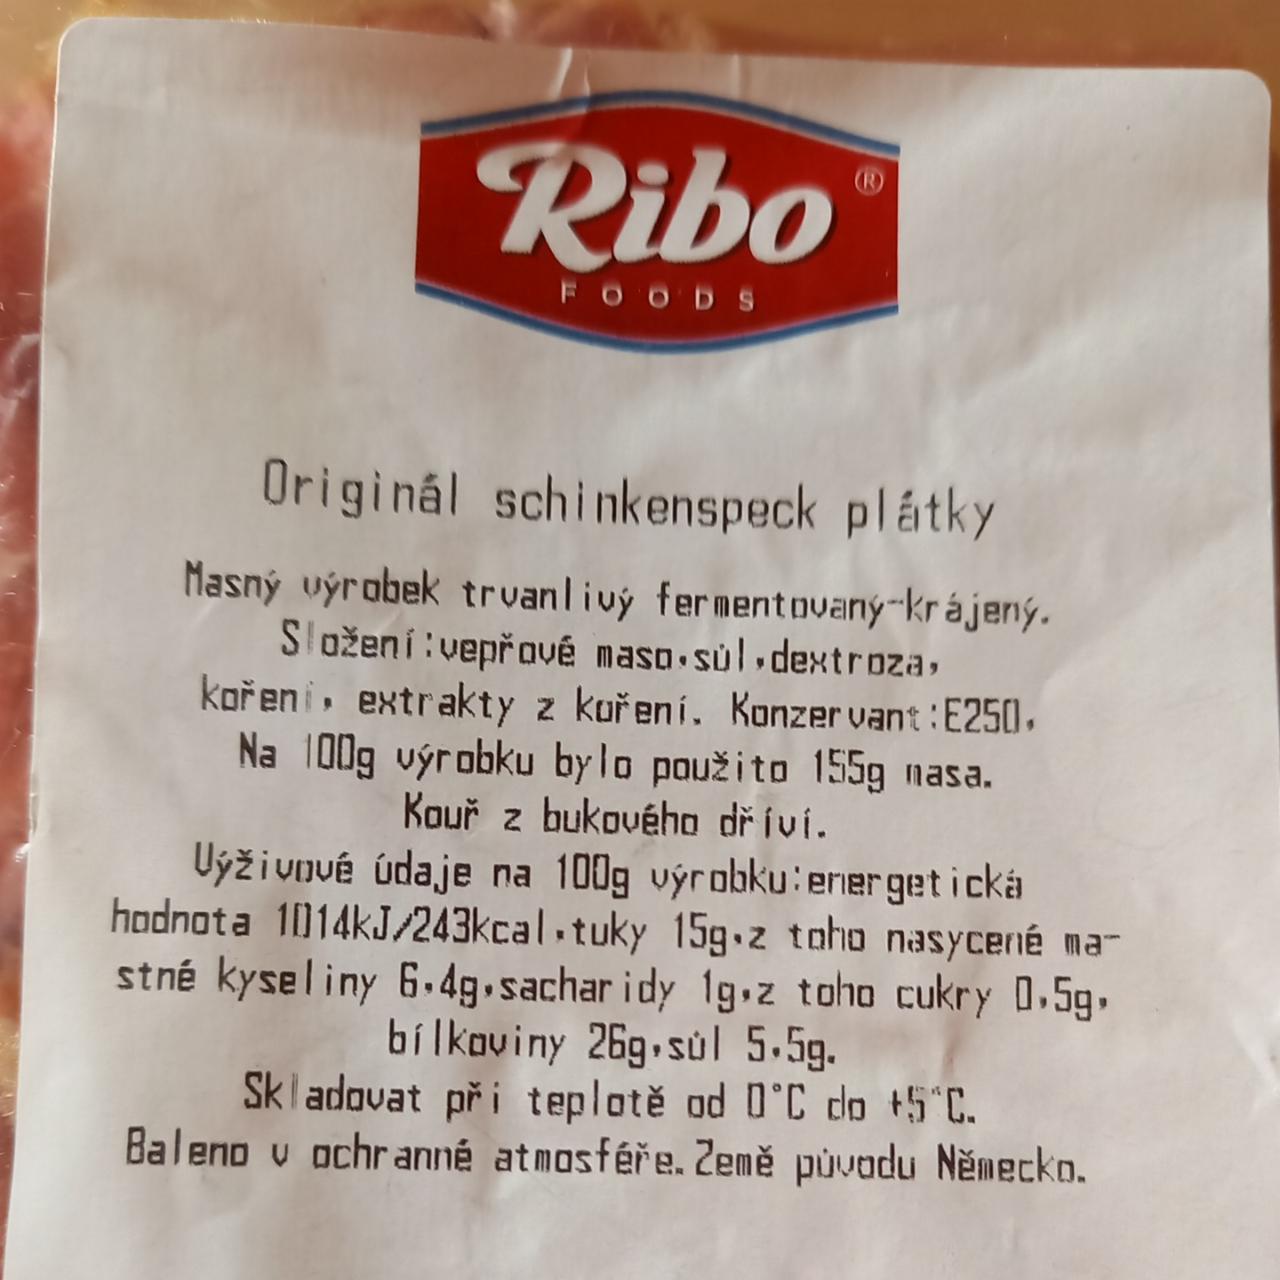 Fotografie - Originál schinkenspeck plátky Ribo foods